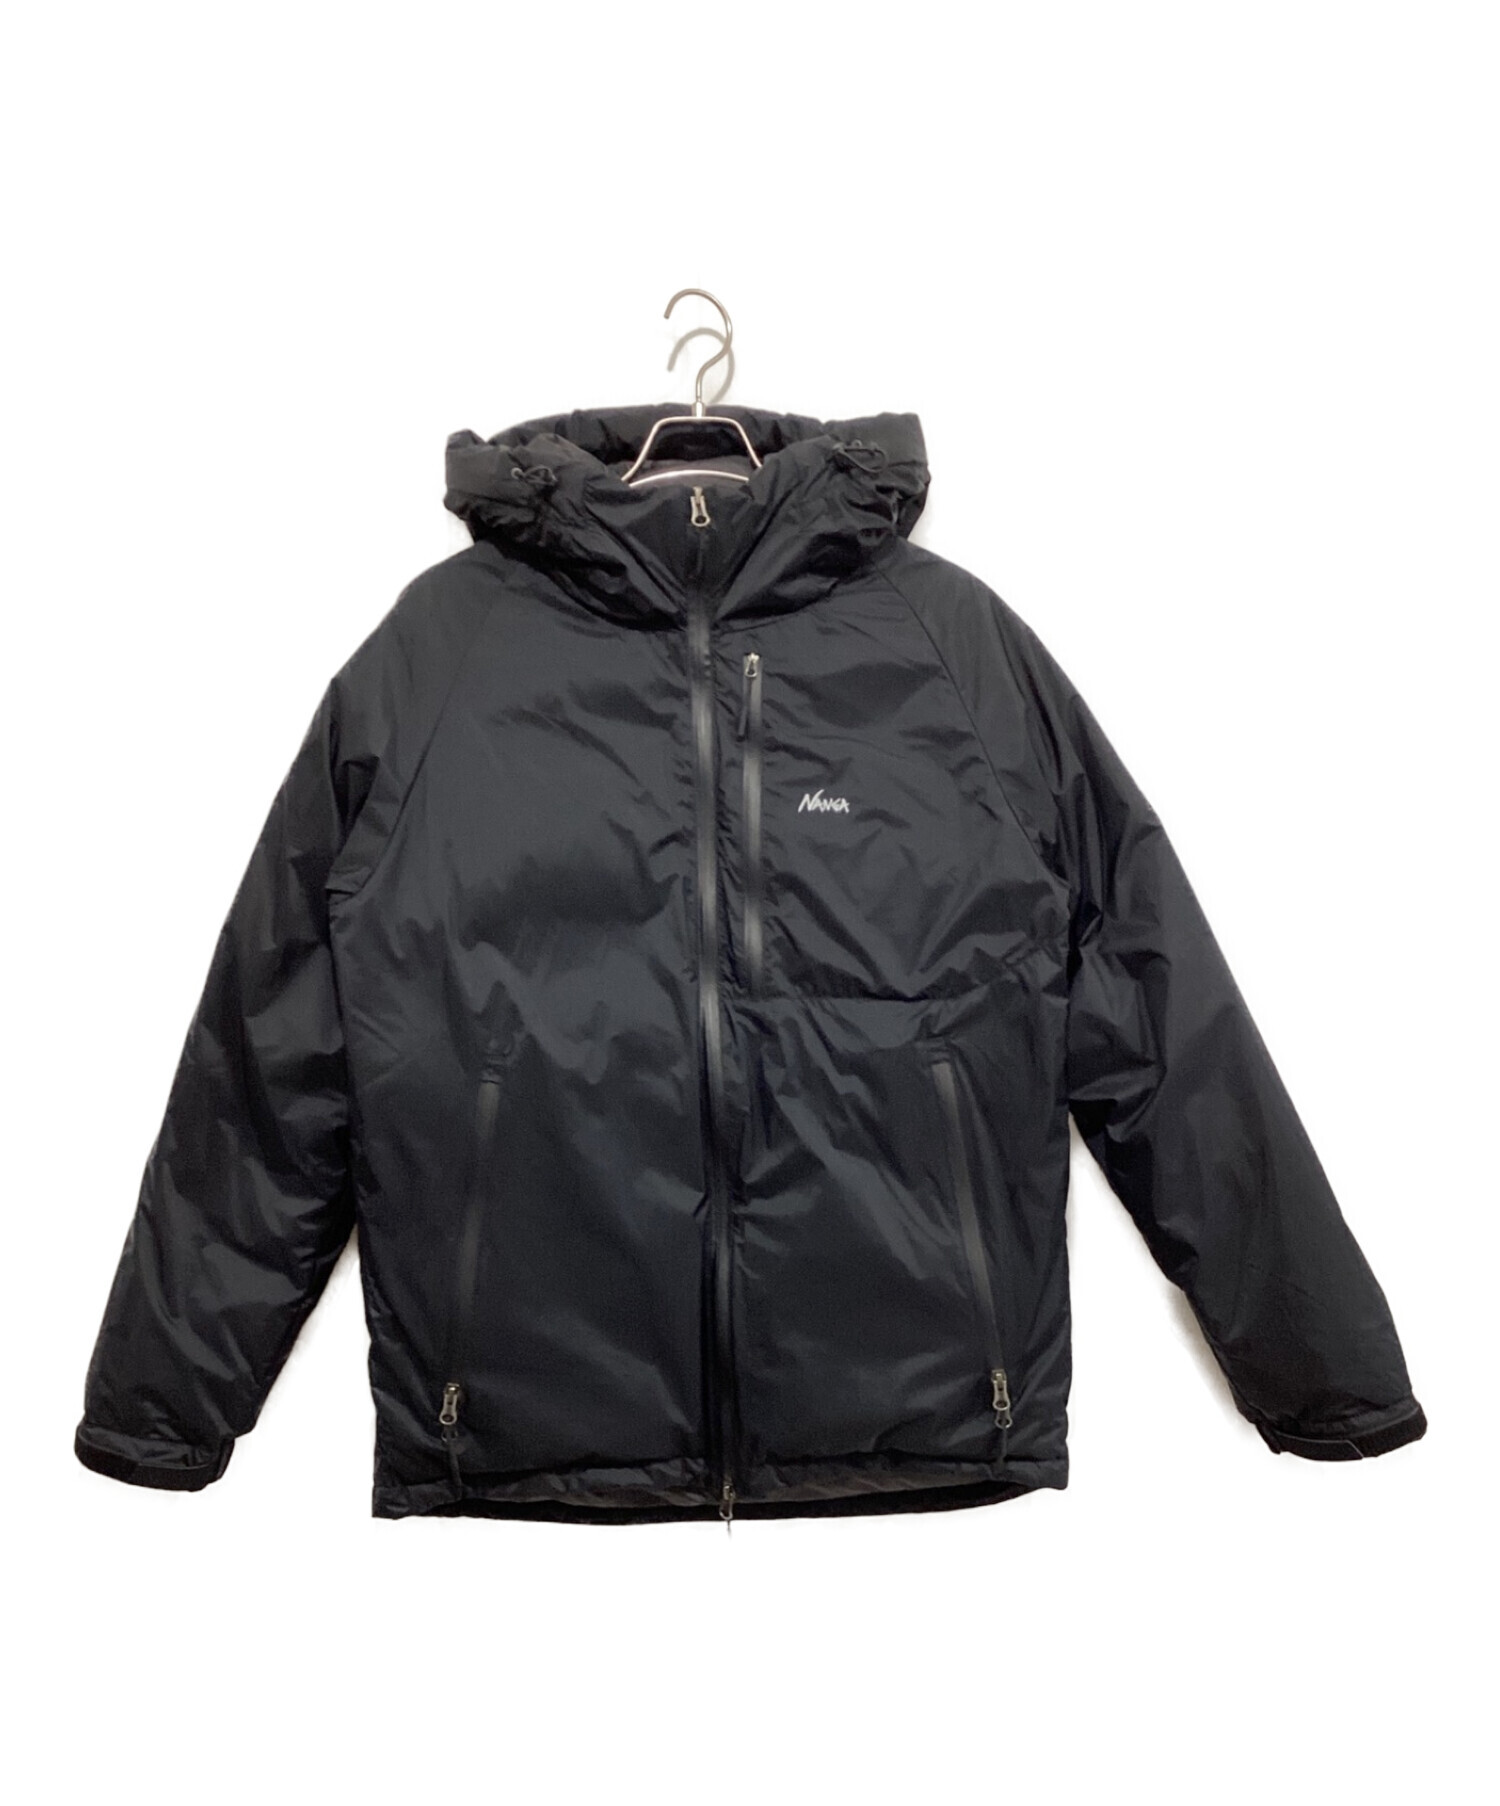 NANGA (ナンガ) AURORA DOWN JACKET / オーロラダウン ジャケット ブラック サイズ:XL